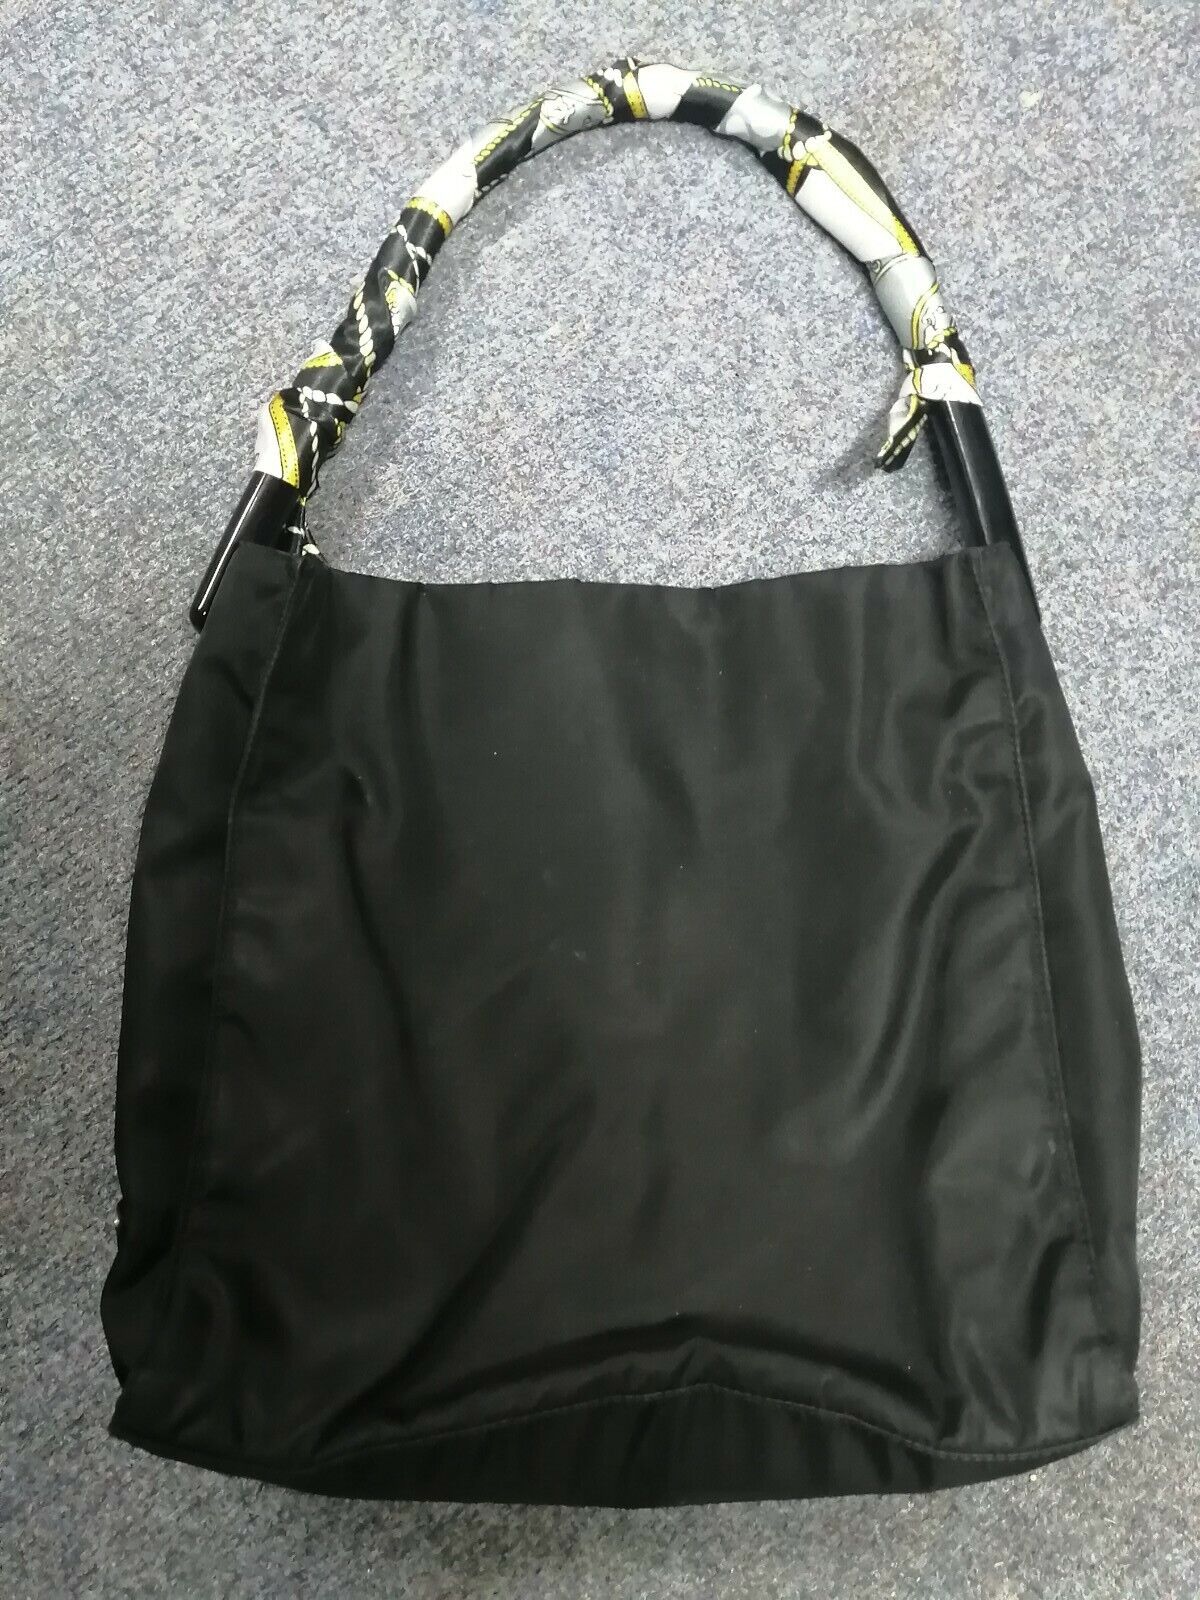 Prada nylon shoulder bag black